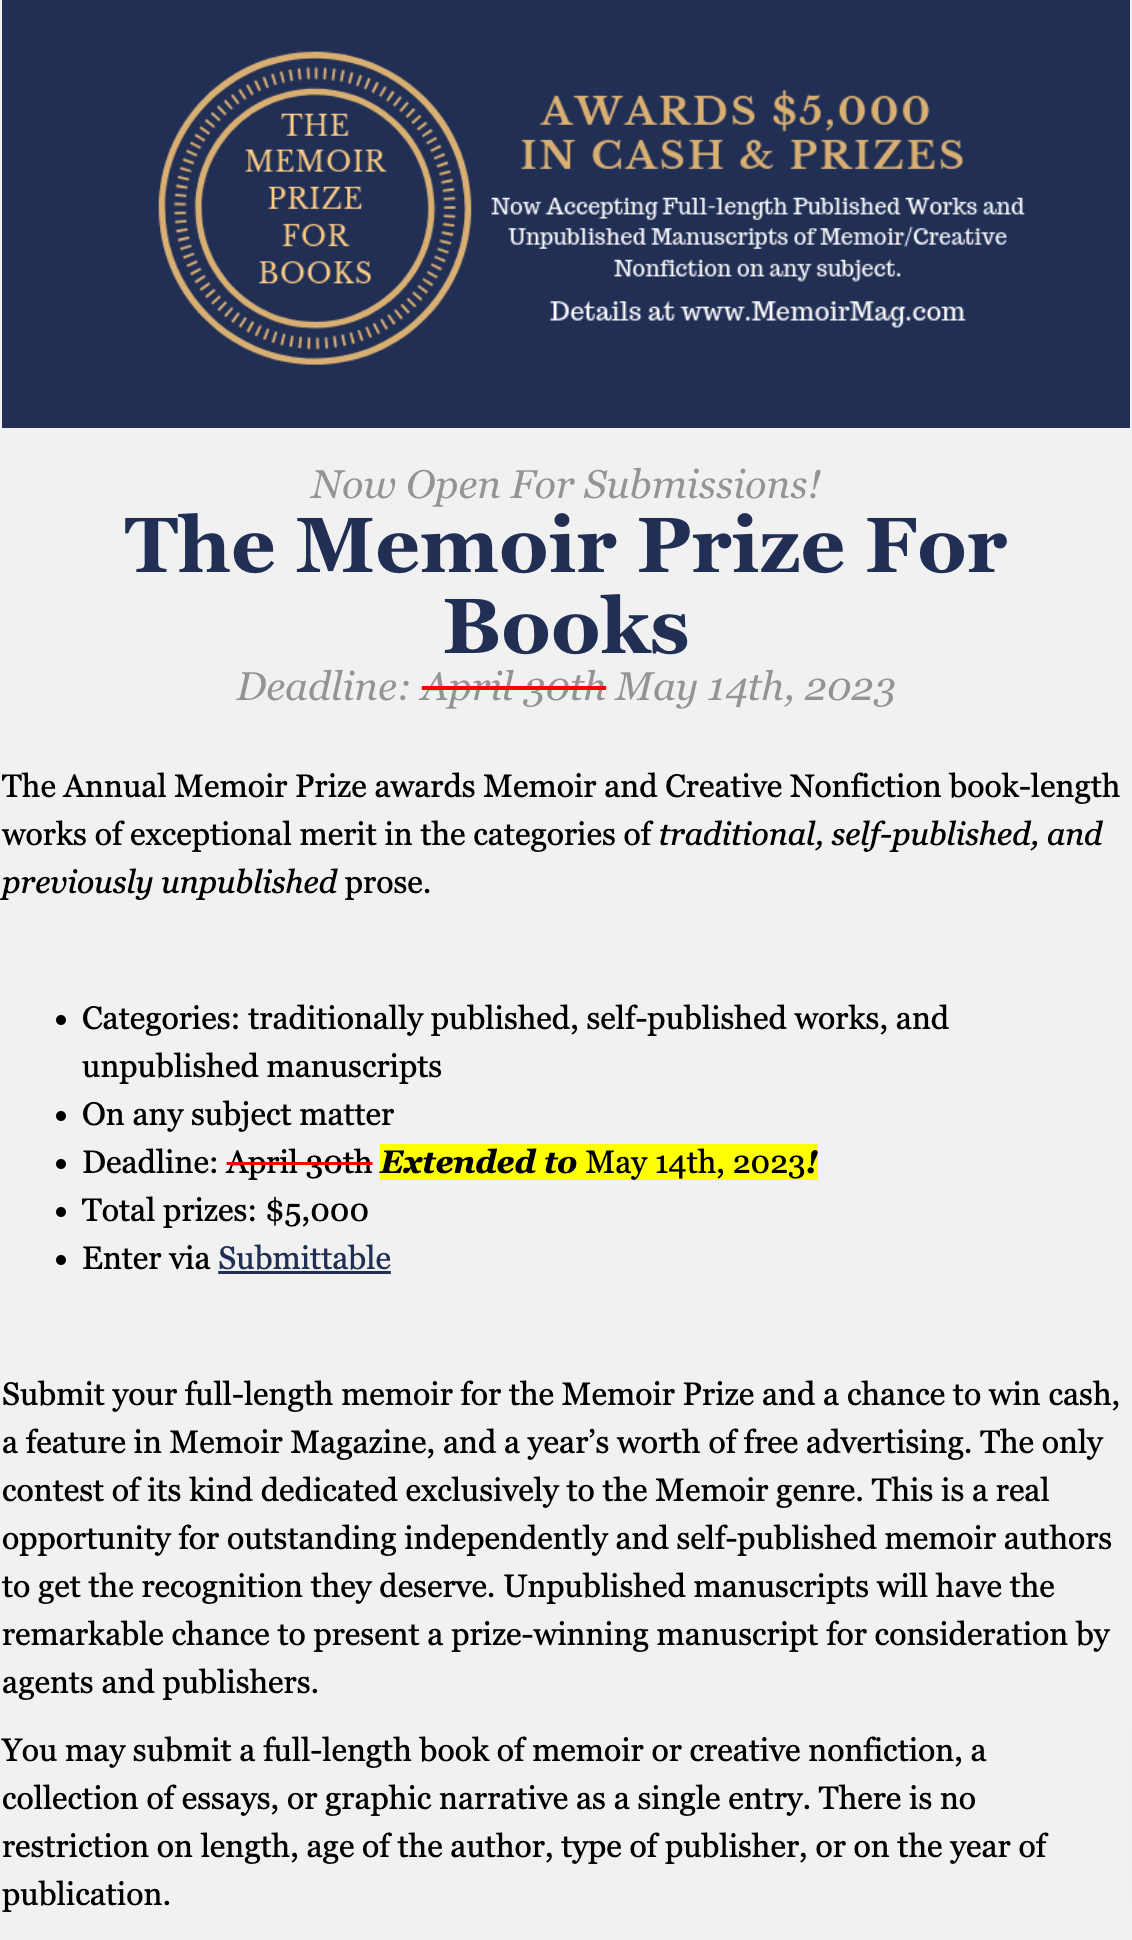 The Memoir Prize for Books